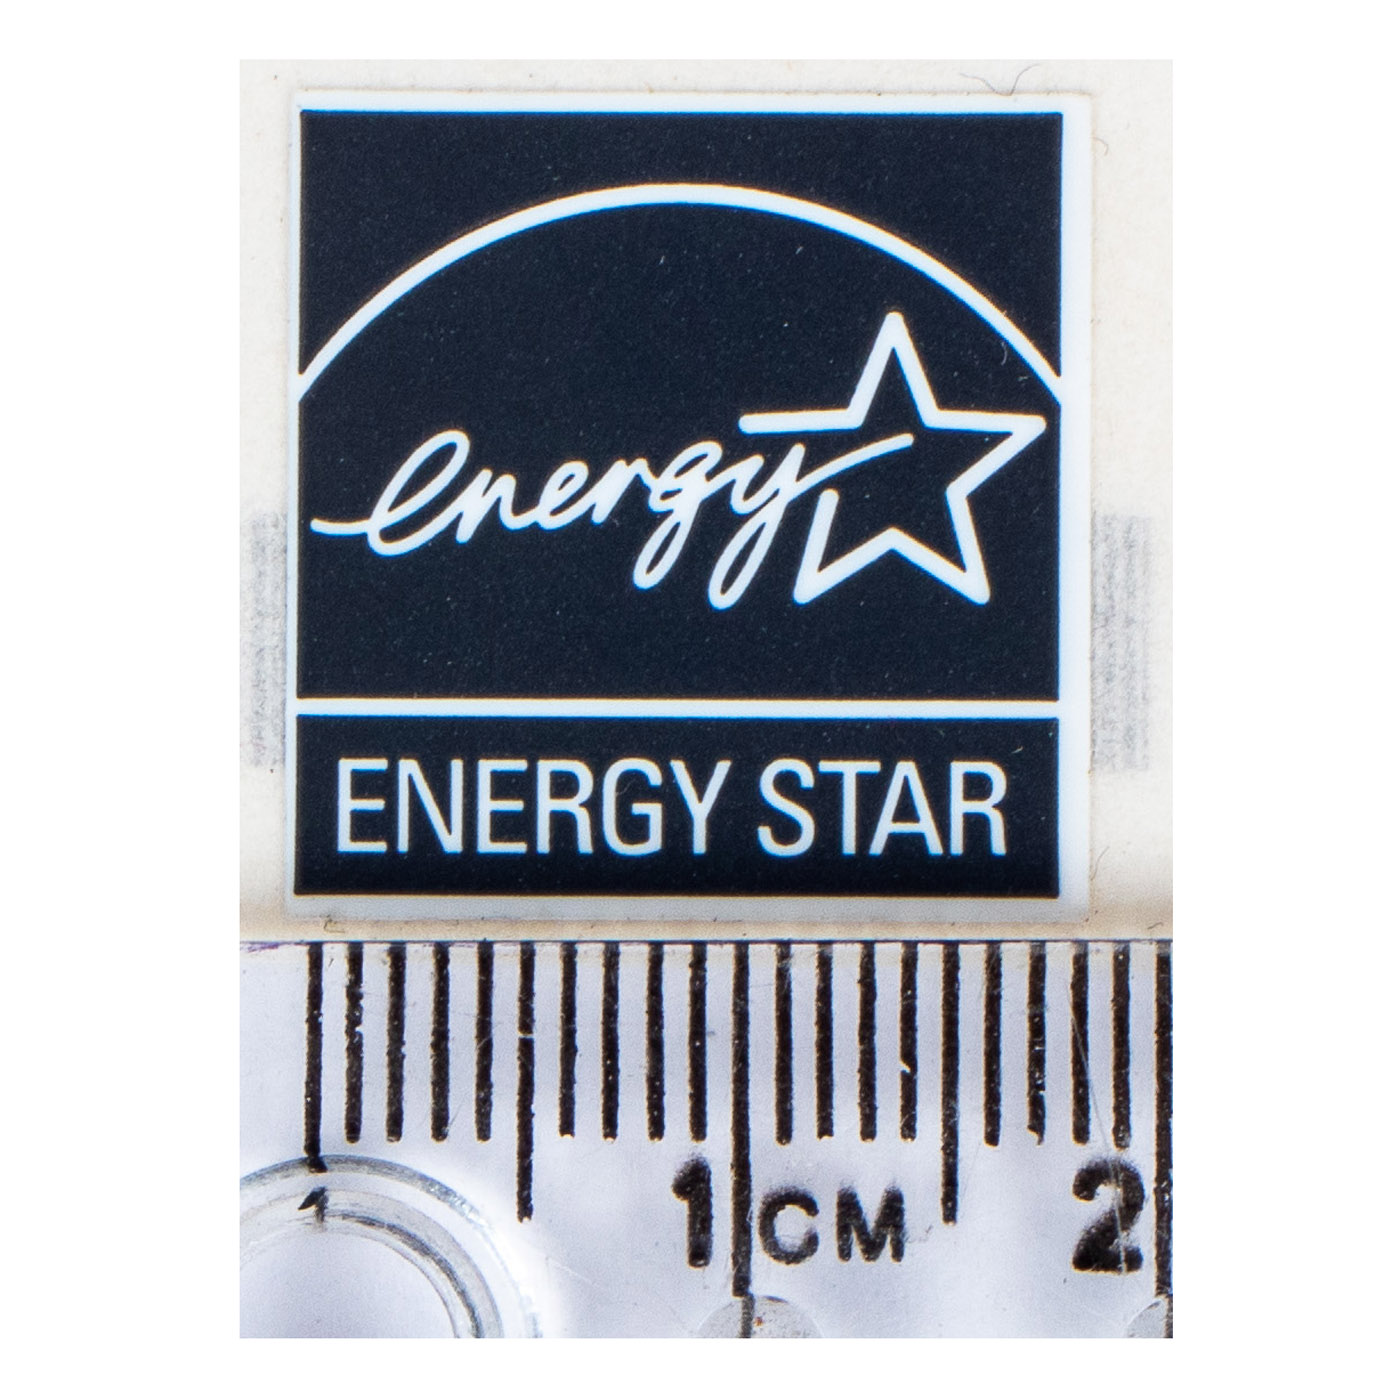 Naklejka Energy Star black 19 x 20 mm